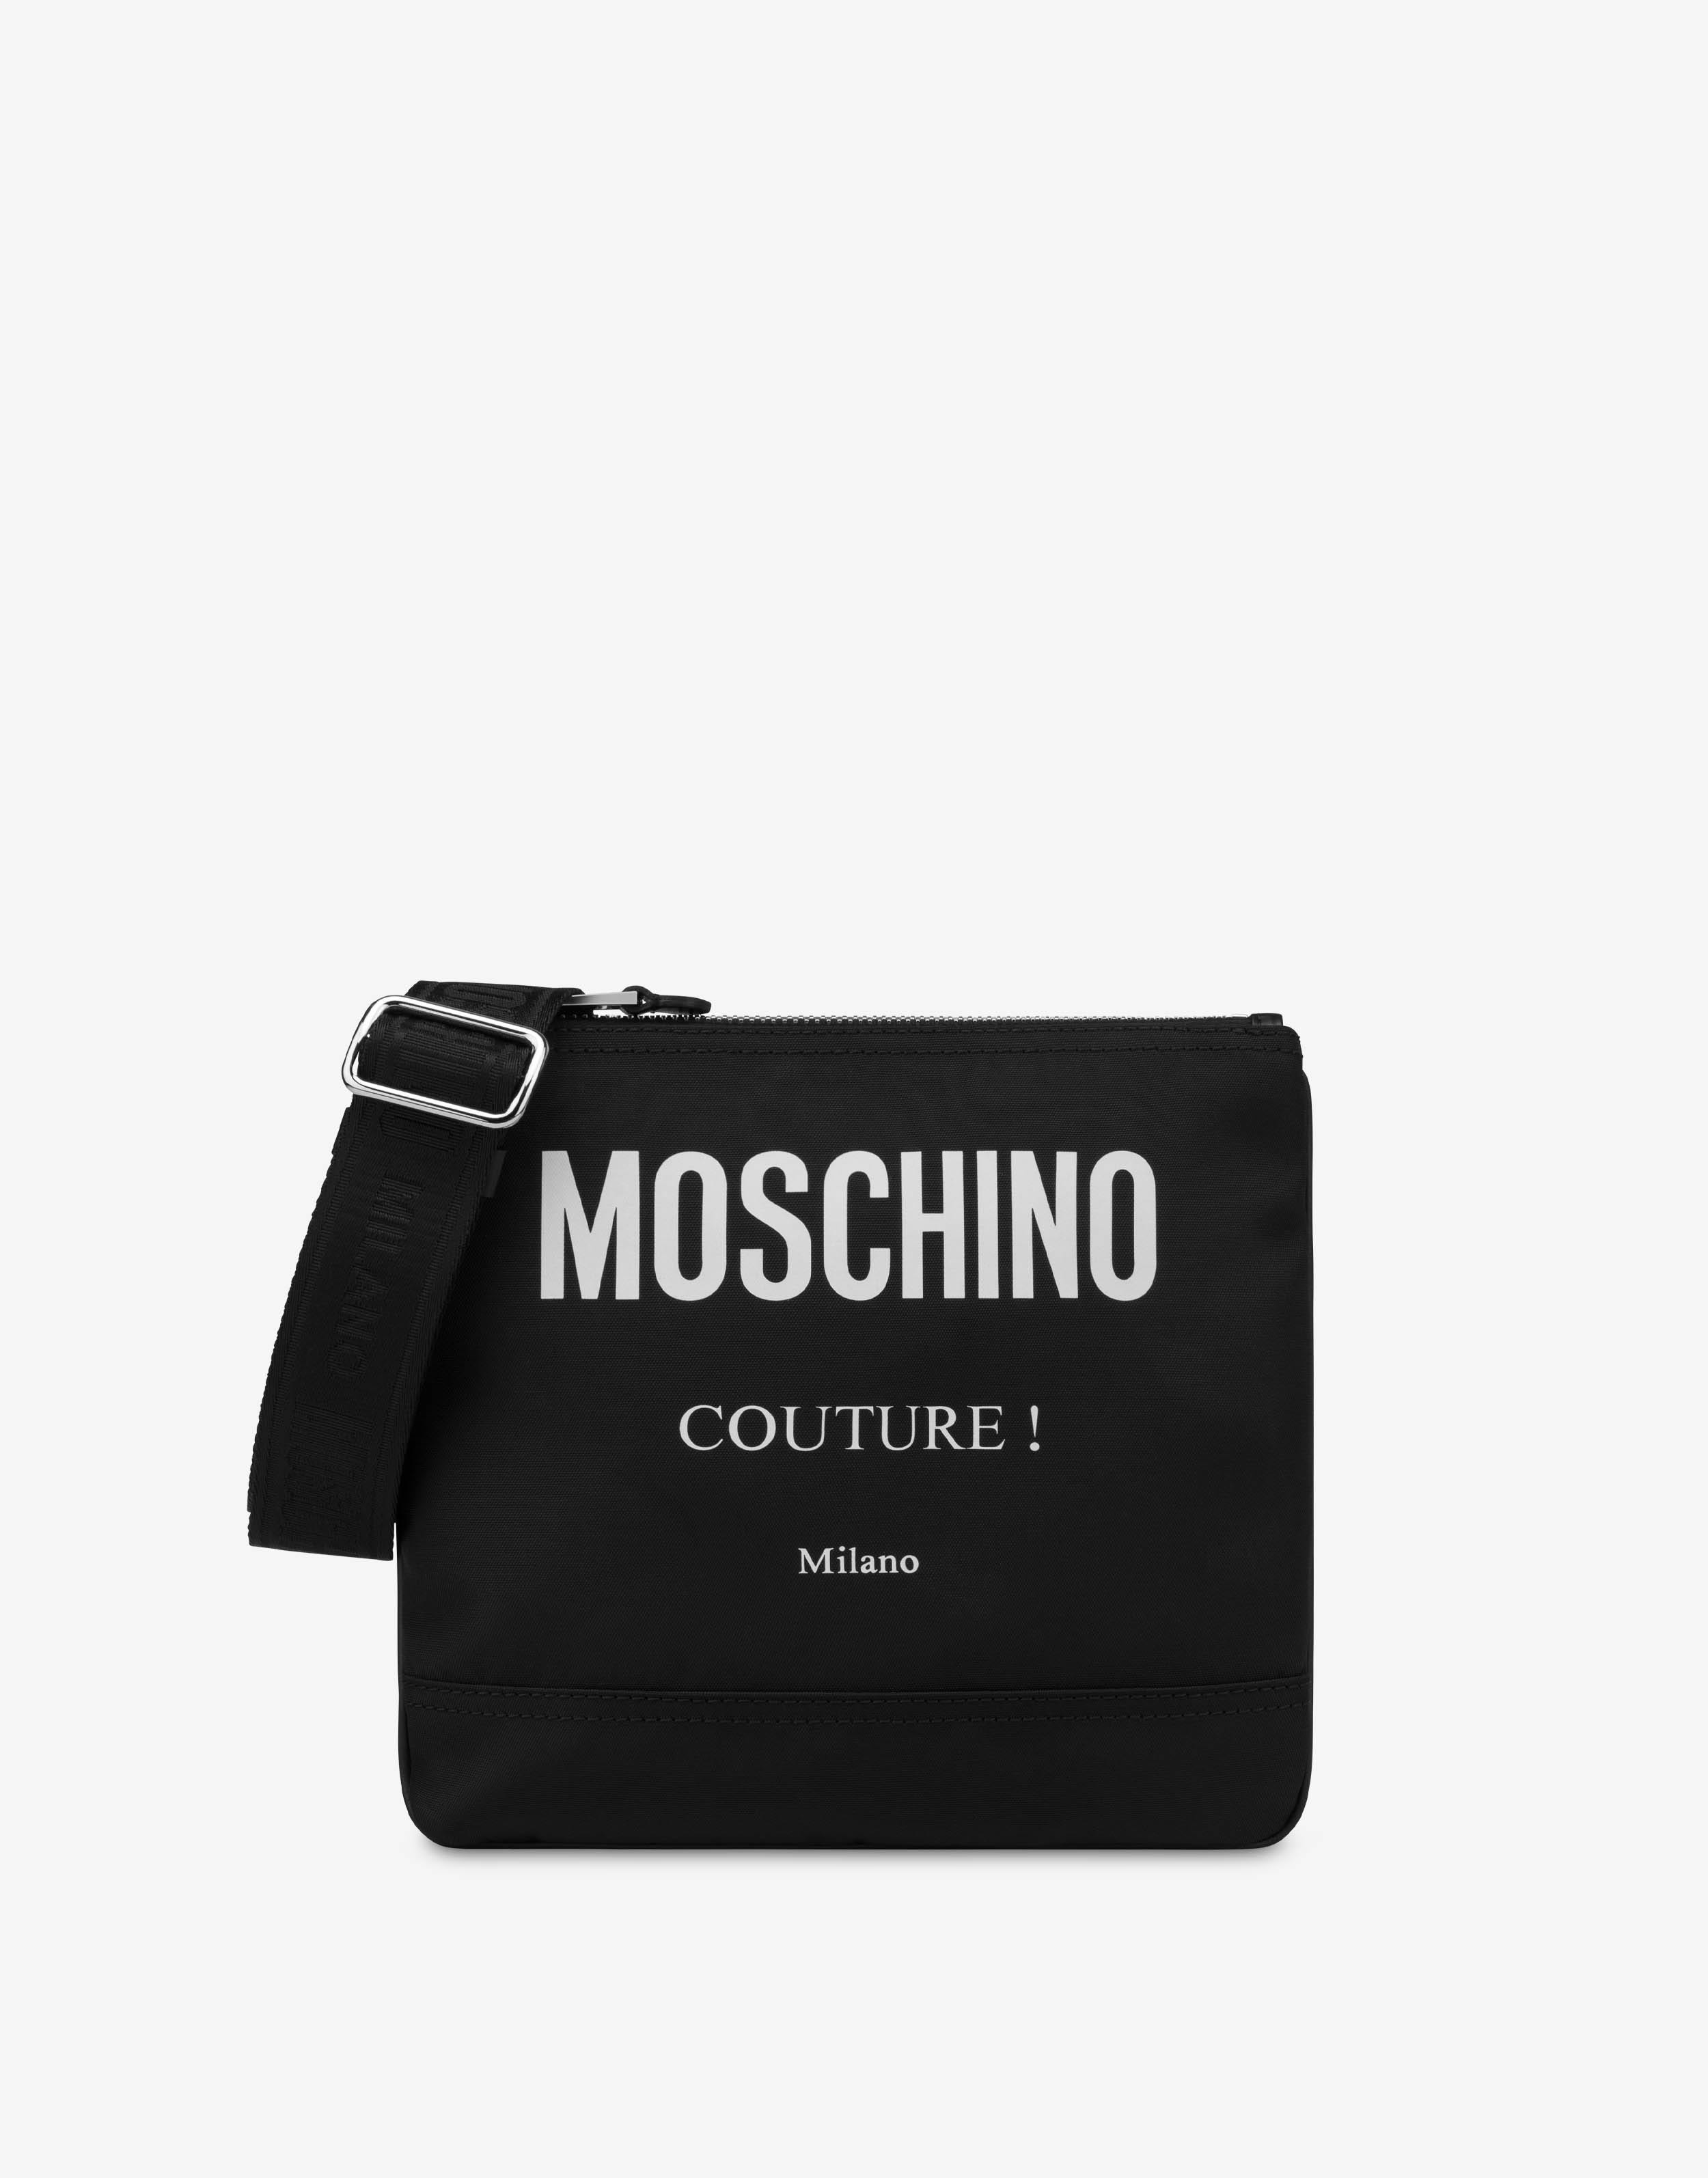 MOSCHINO COUTURE SHOULDER BAG - 1